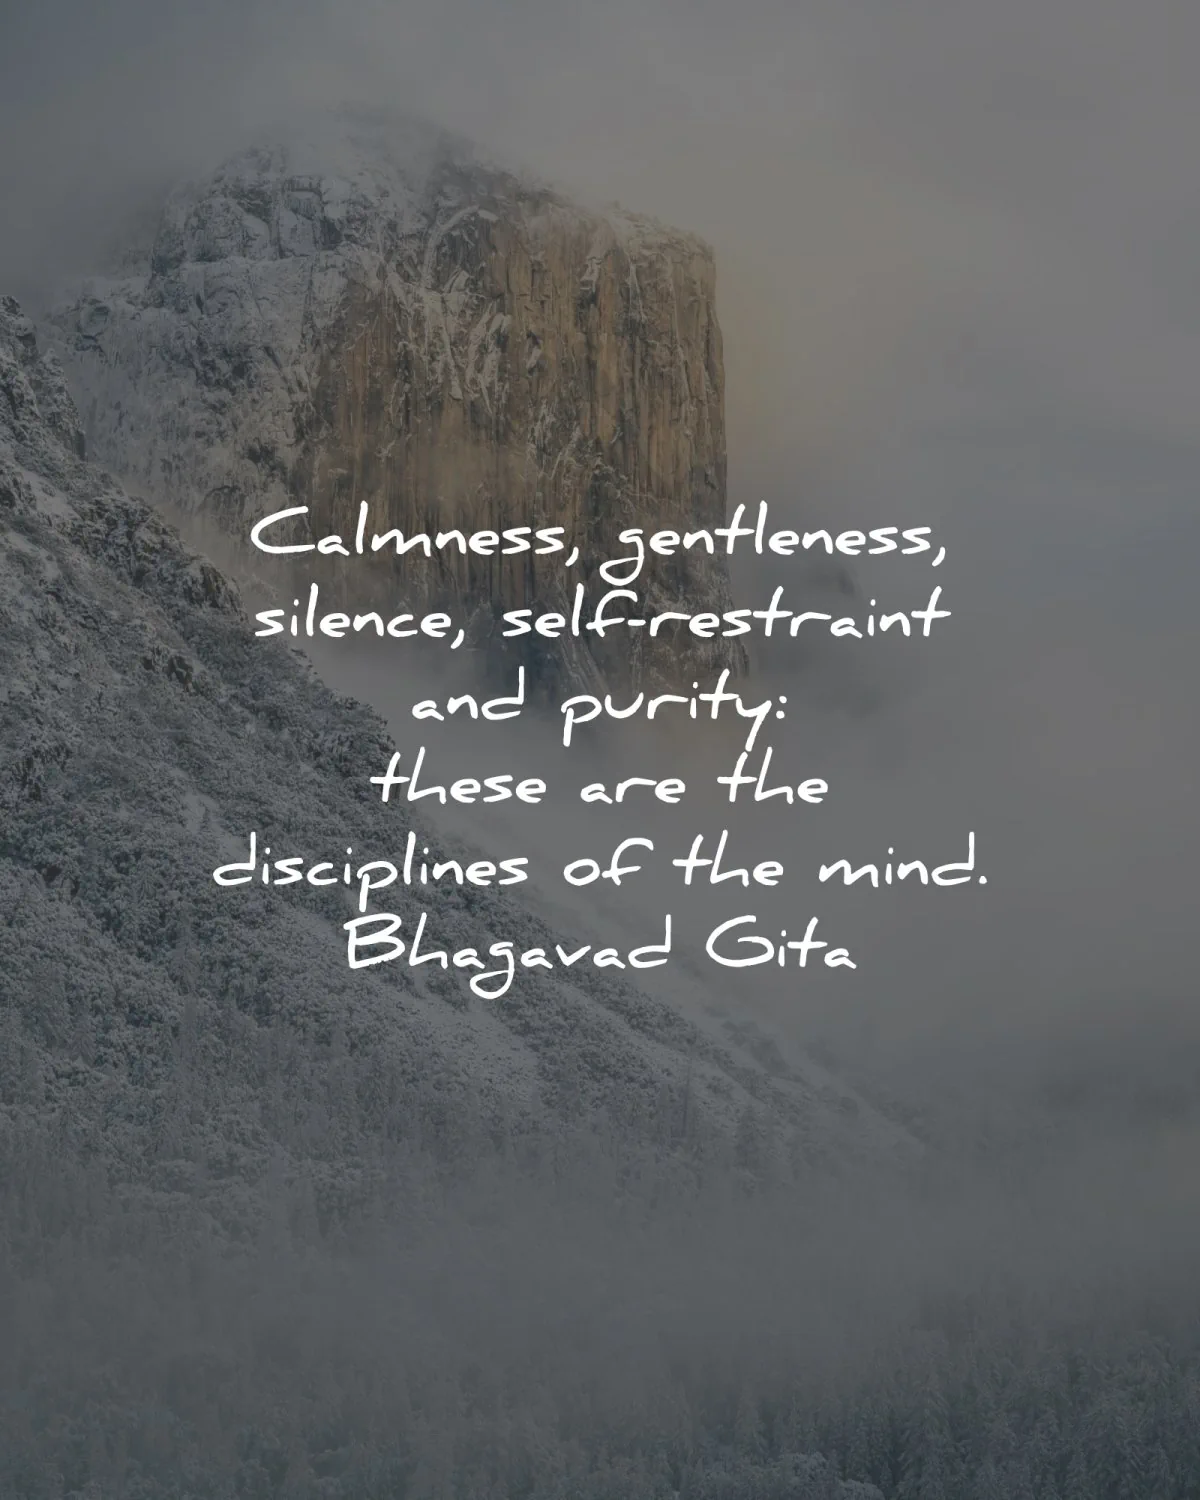 mind quotes calmness gentleness purity bhagavad gita wisdom